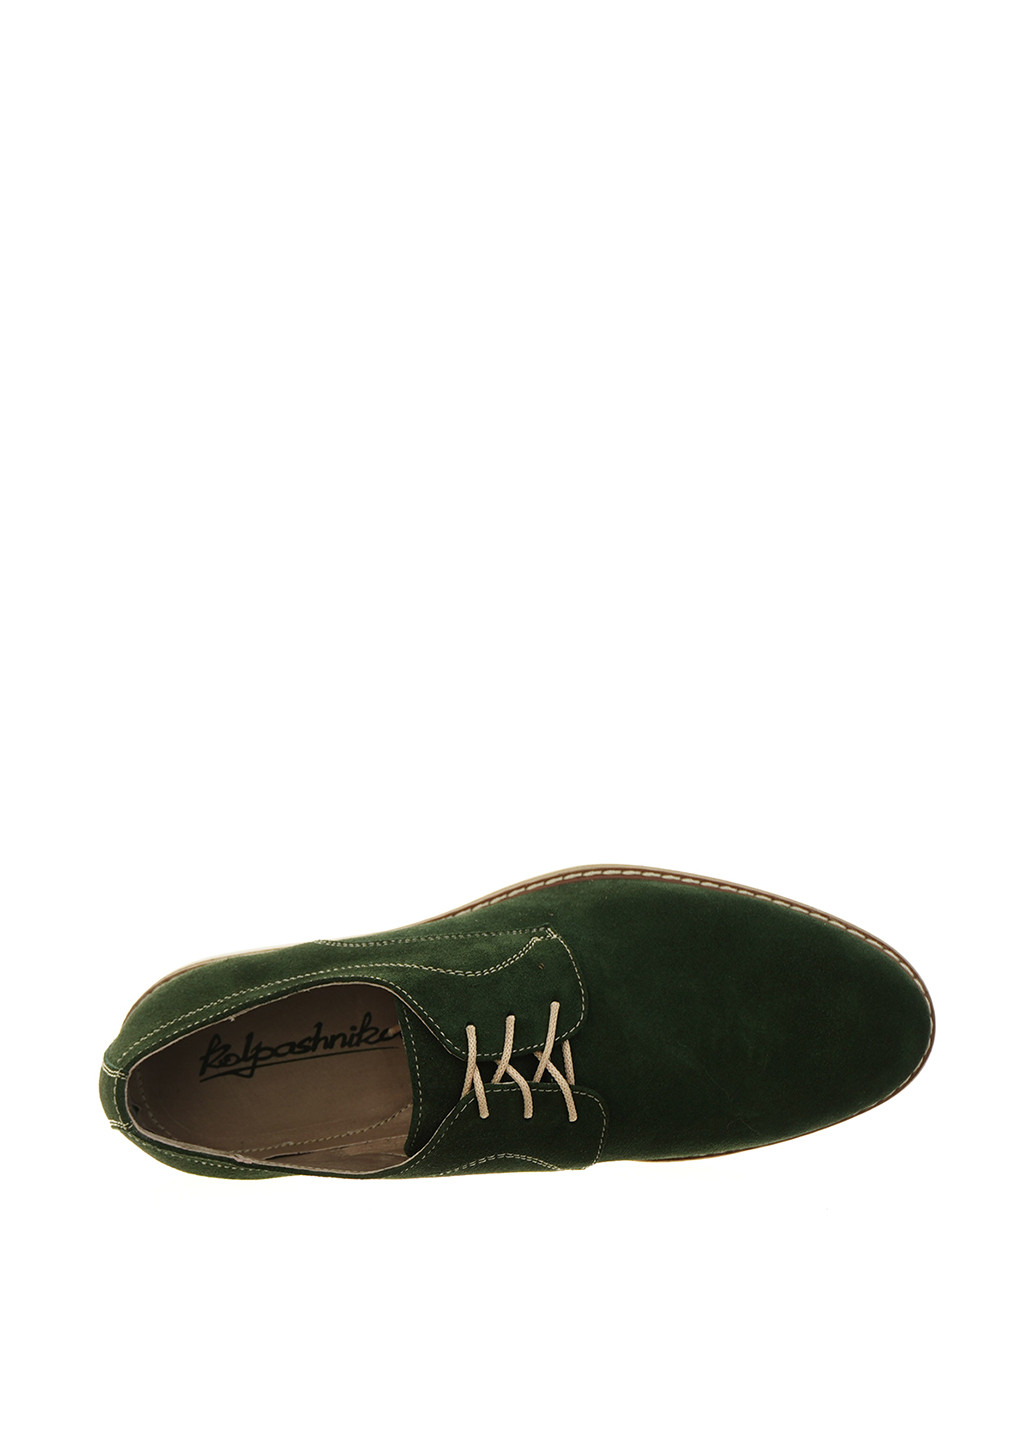 Зеленые кэжуал туфли Kolpashnikov на шнурках